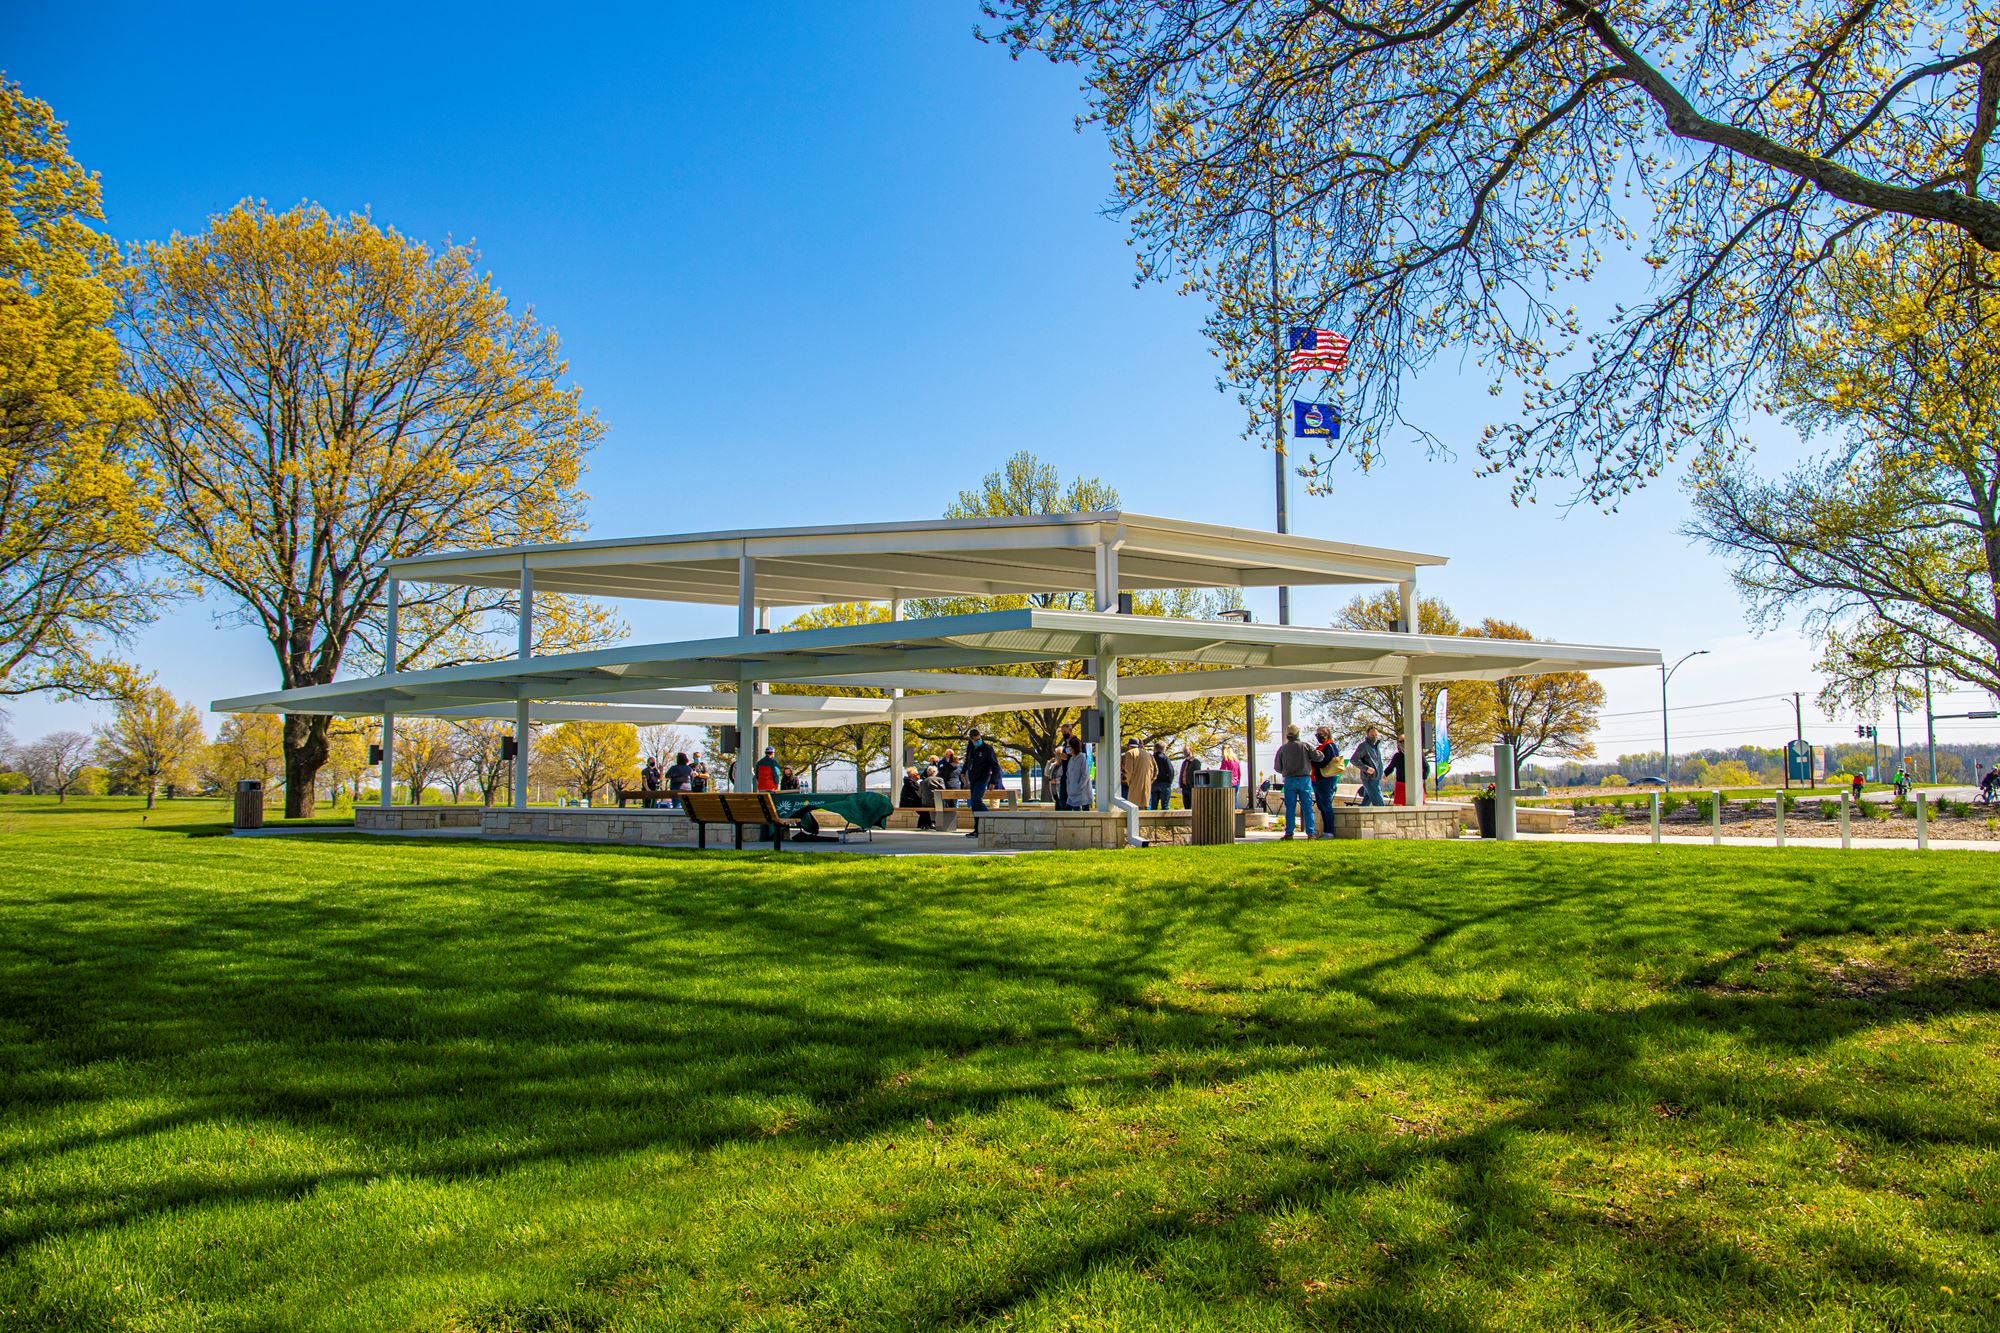 John Barkley Plaza dedicated at Shawnee Mission Park